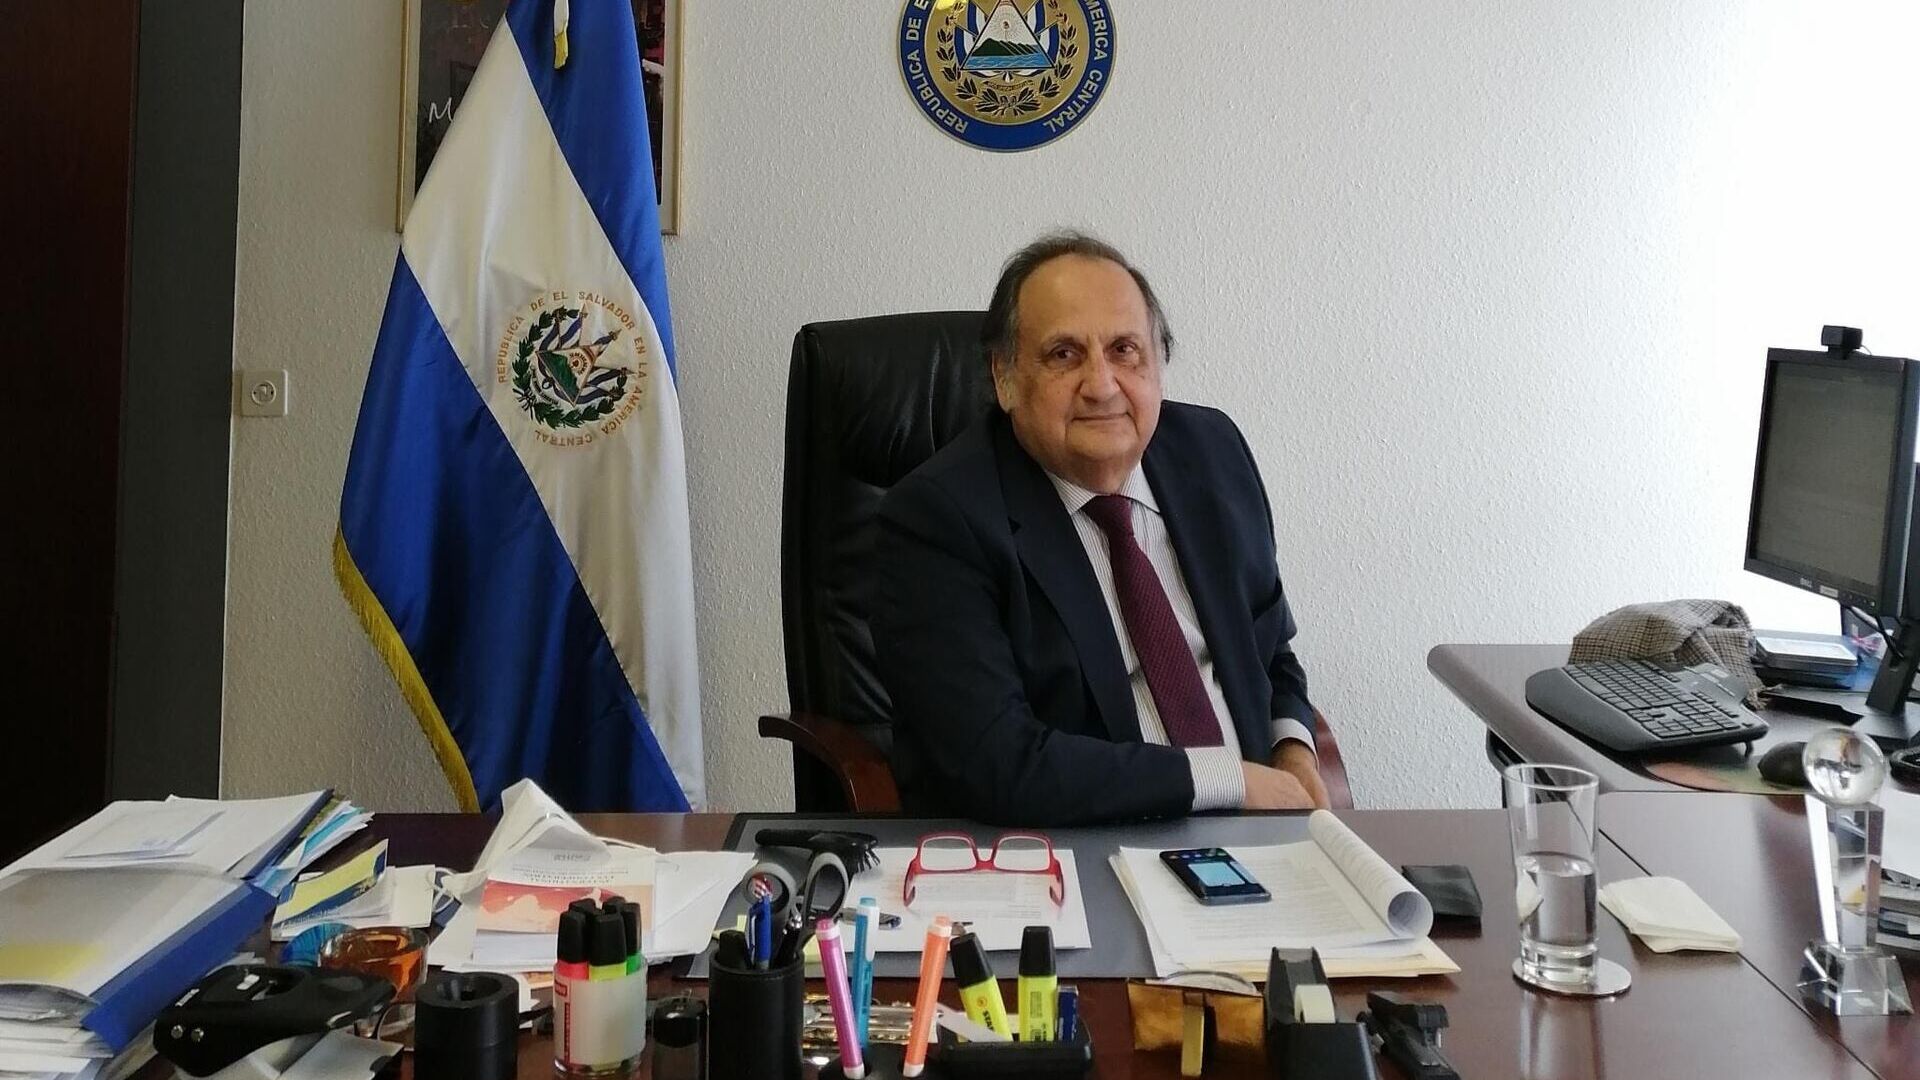 Joaquín Alexander Maza Martelli je veleposlanik Stalne misije Republike El Salvador pri Uredu Ujedinjenih naroda u Ženevi